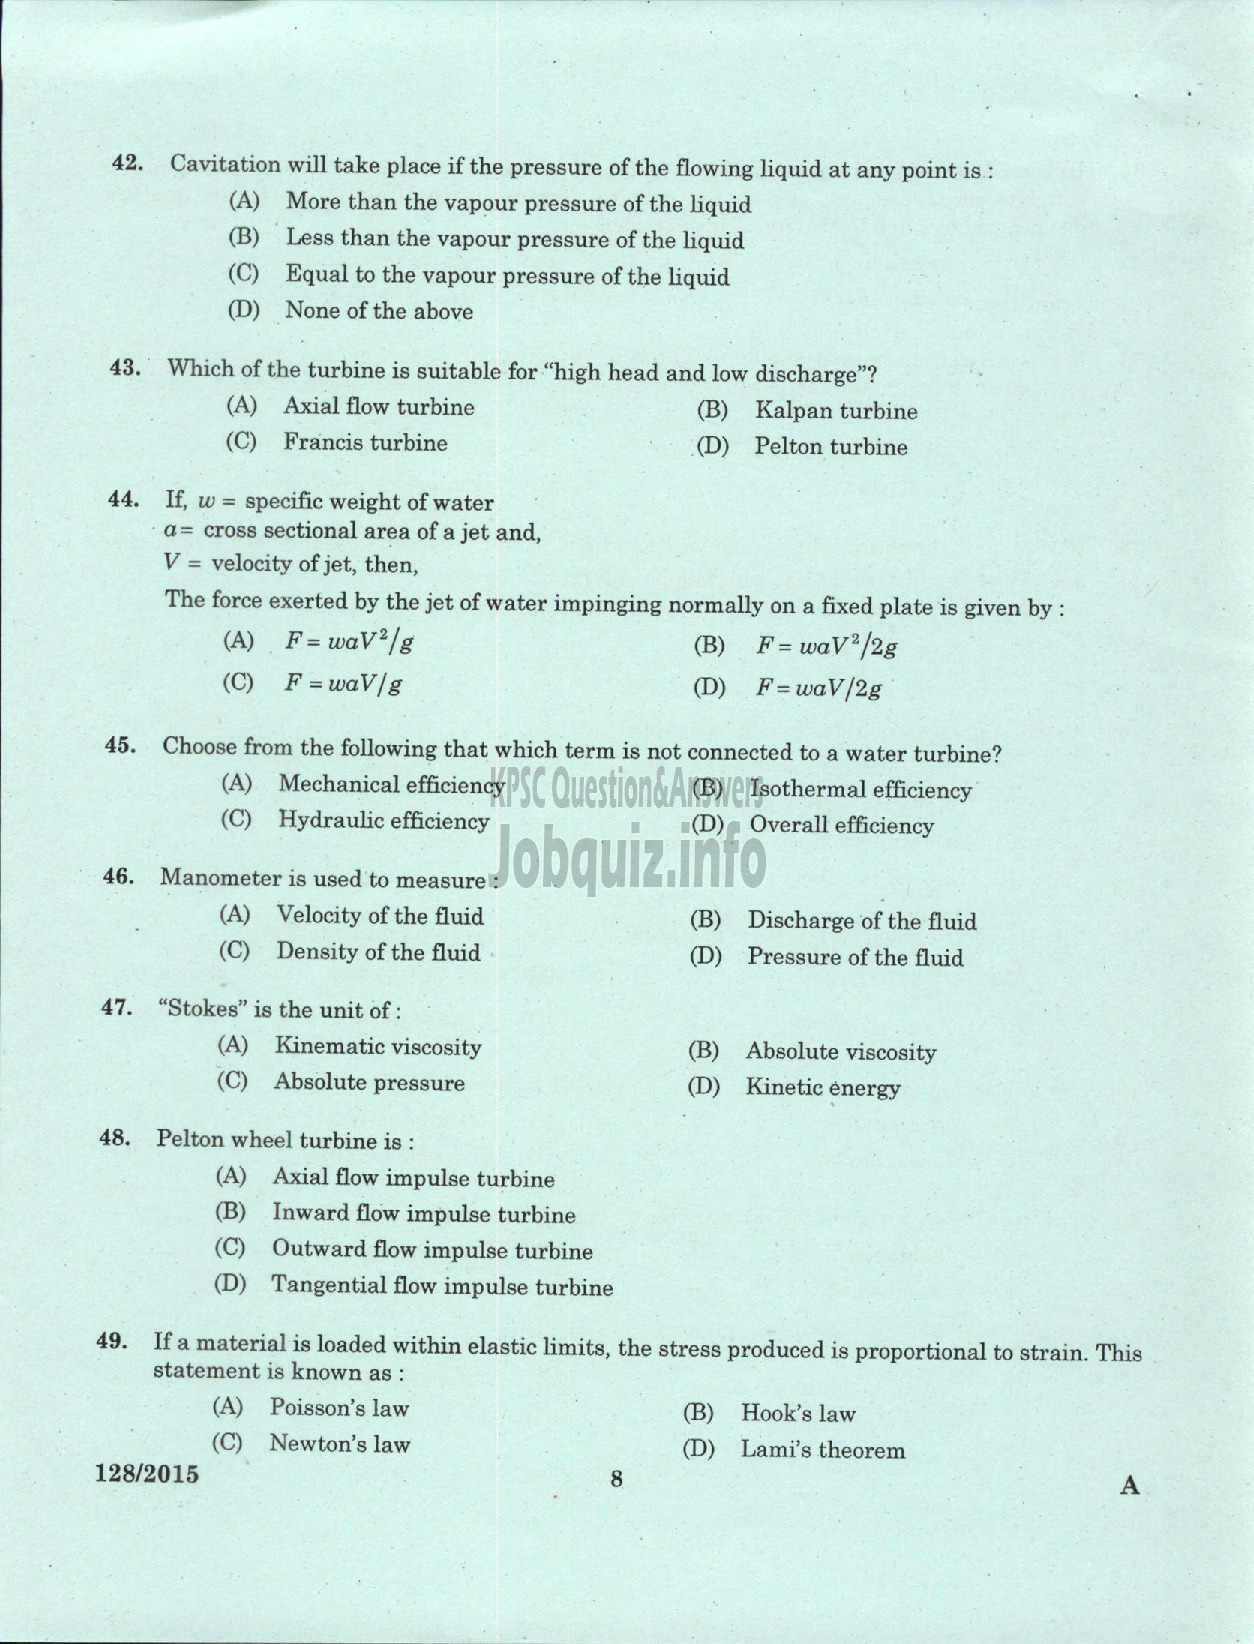 Kerala PSC Question Paper - ASSISTANT ENGINEER MECHANICAL PLANTATION CORPORATION OF KERALA LTD-6